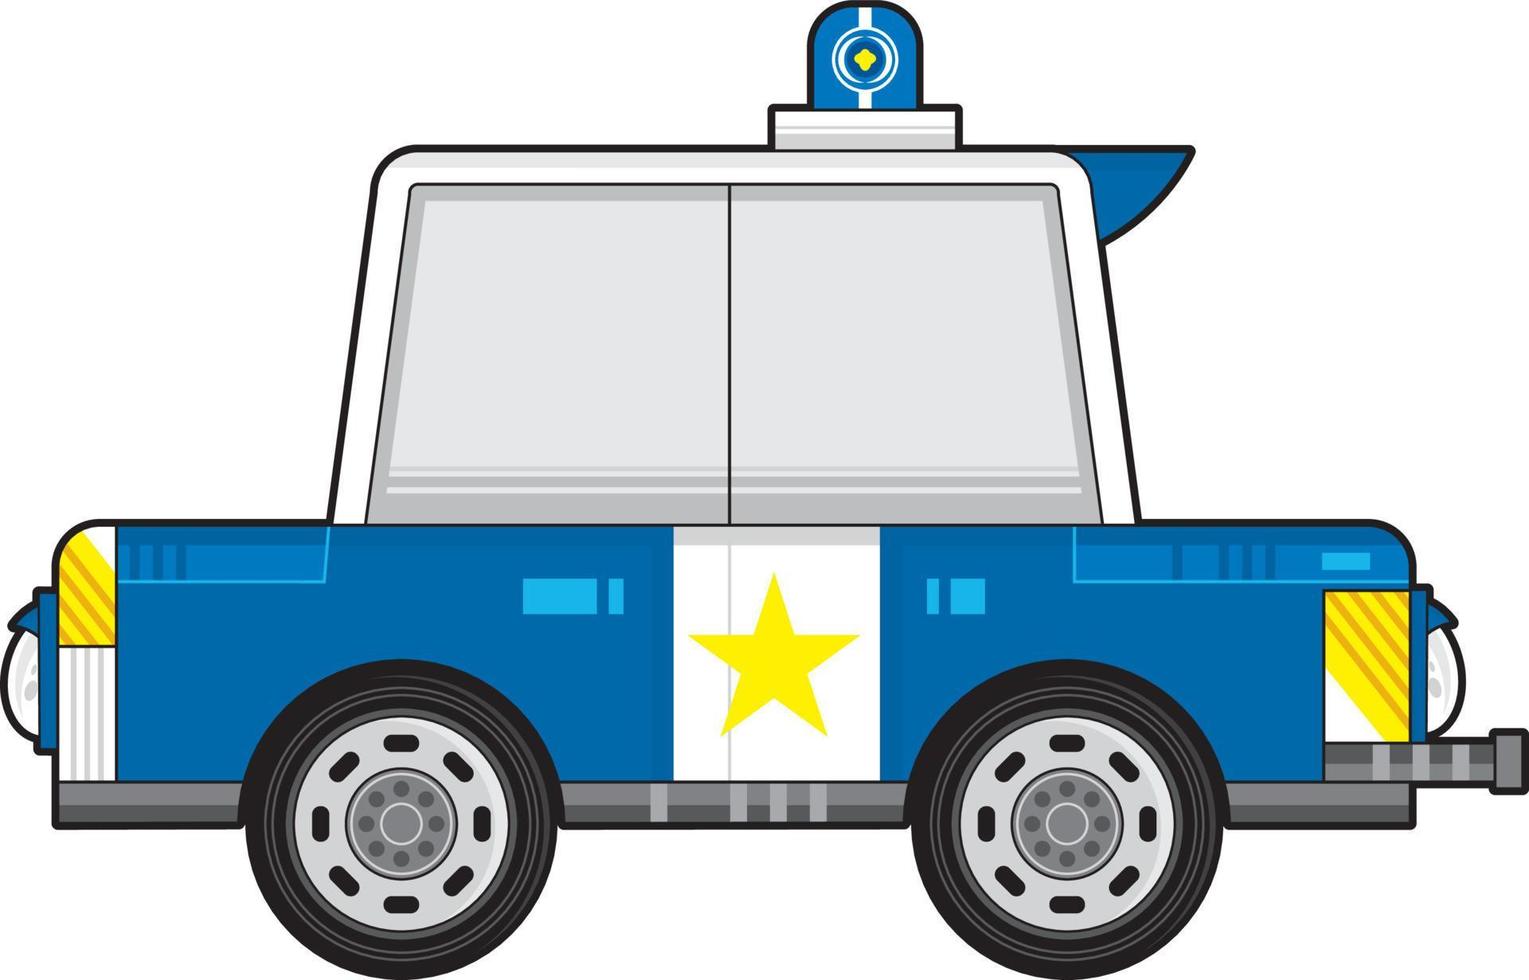 Cartoon Police Car Illustration vector